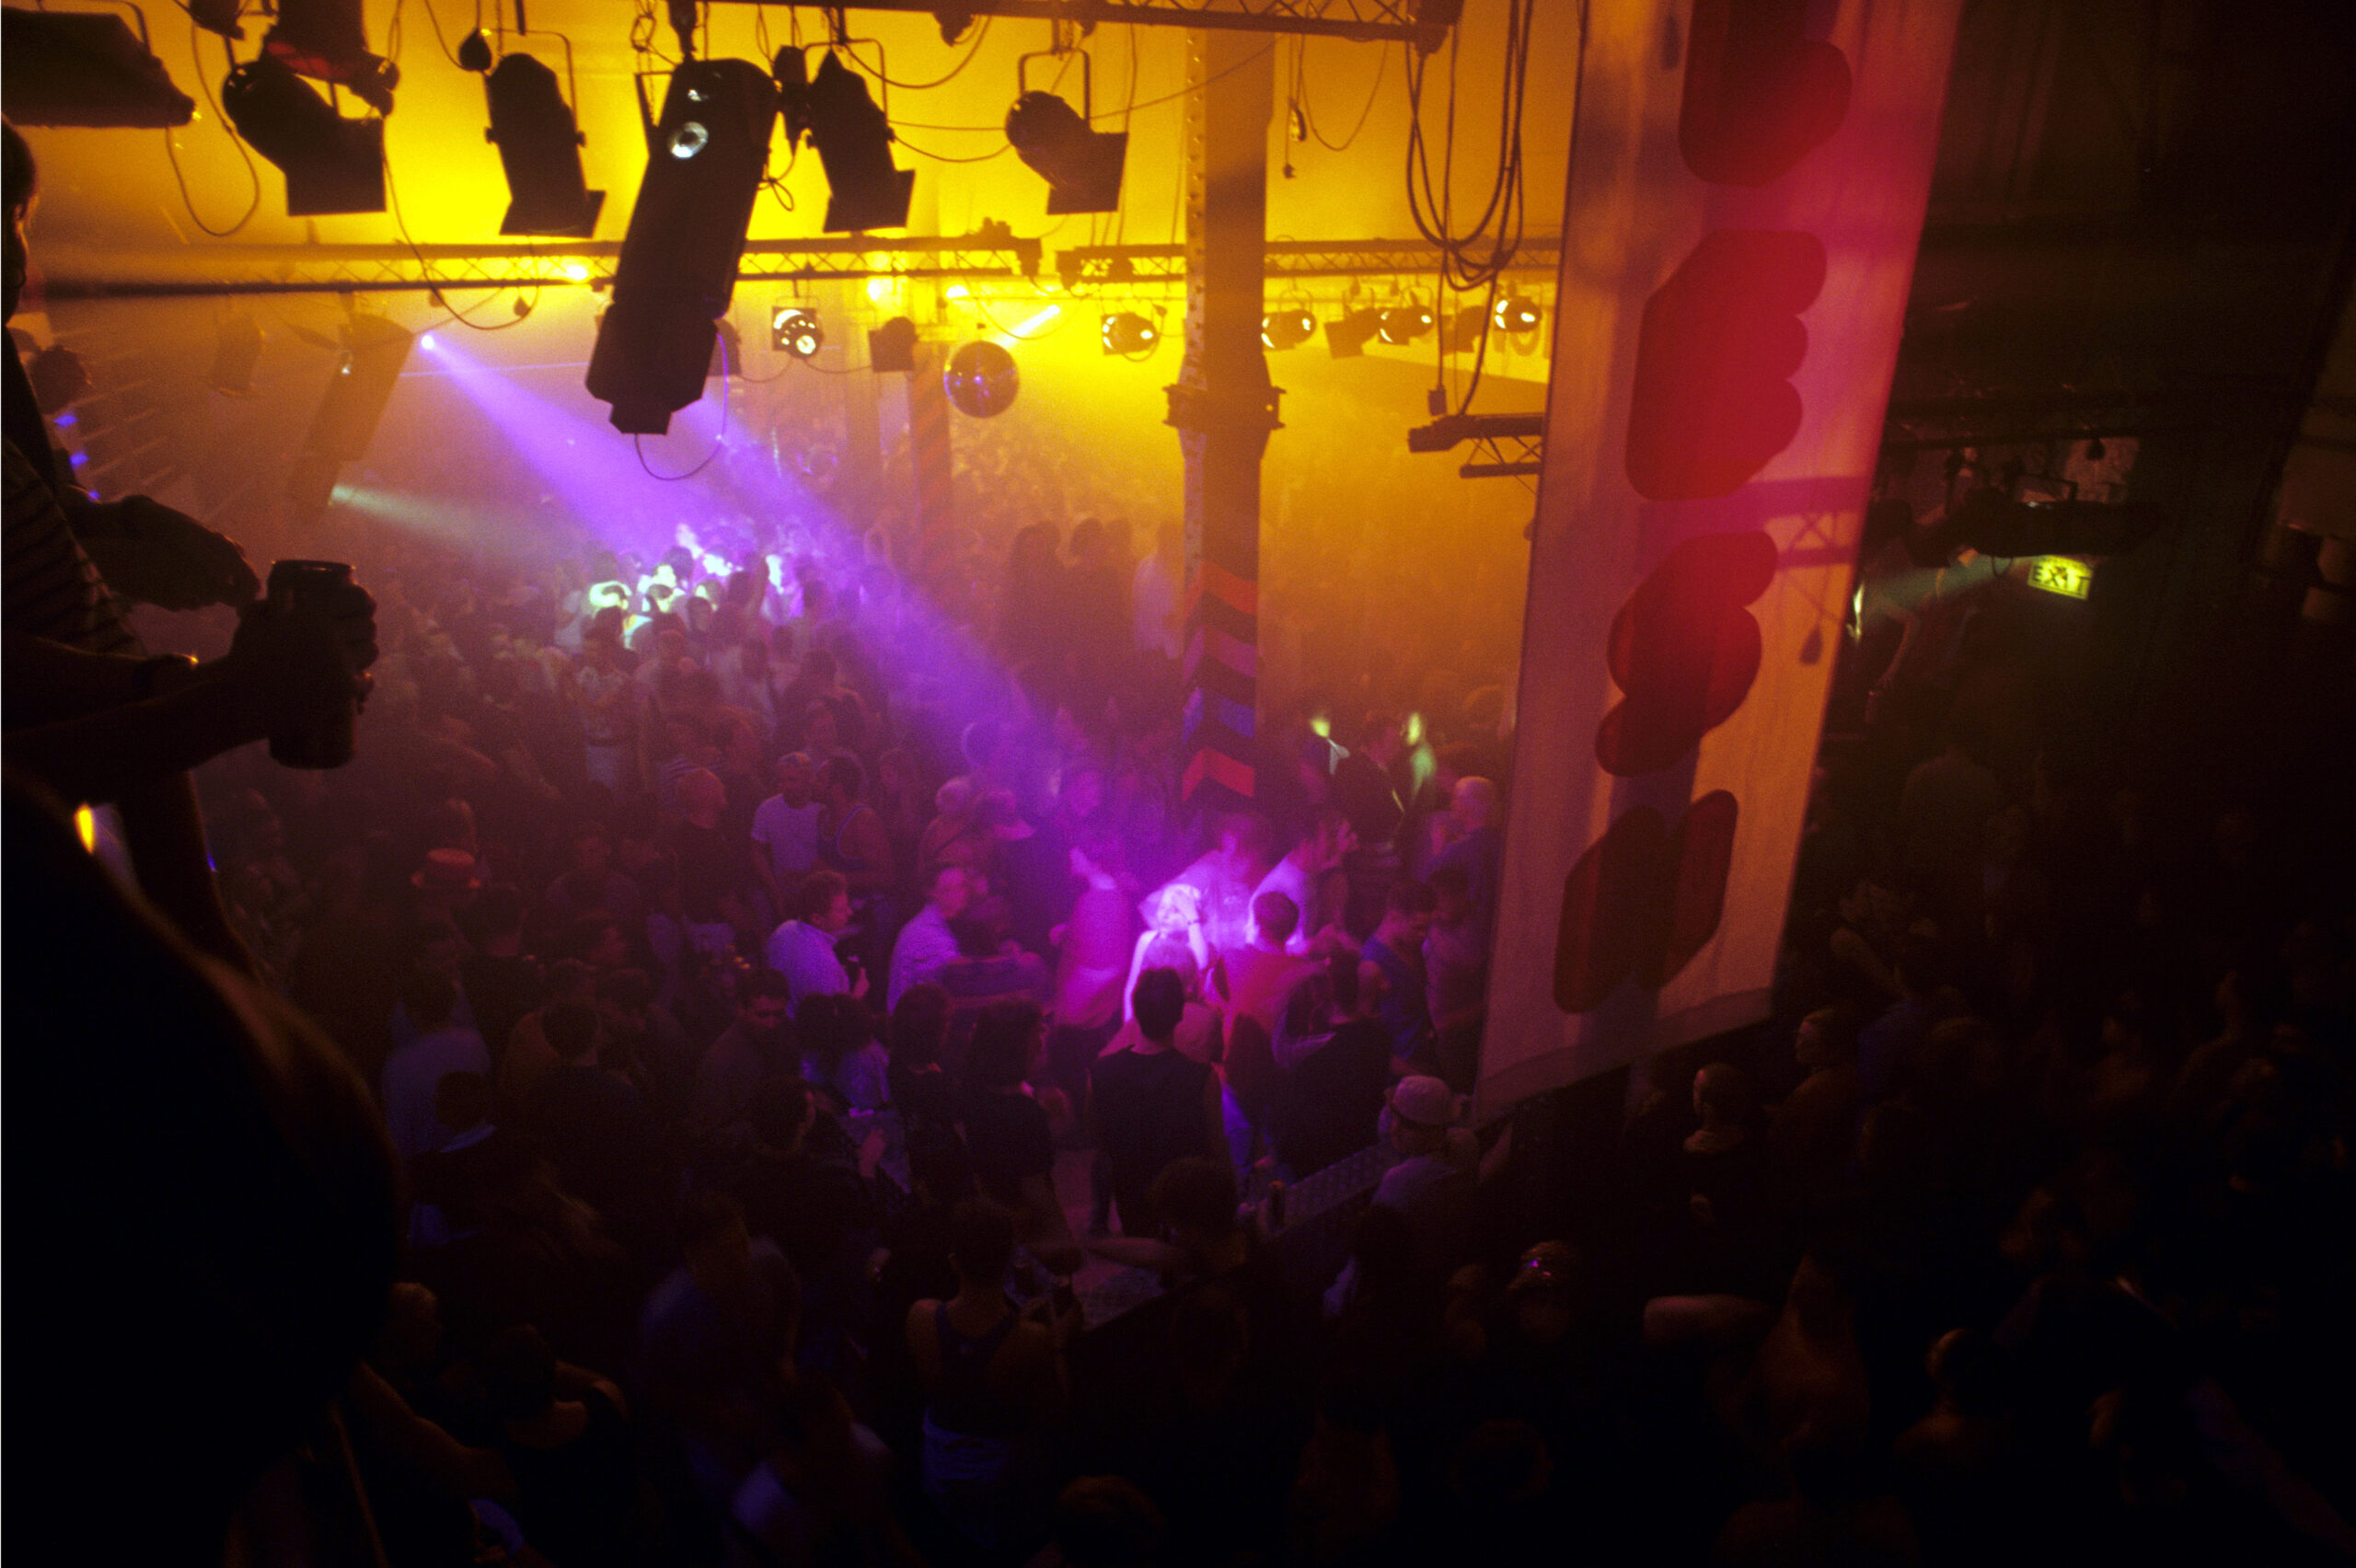 hacienda nightclub, manchester 1992